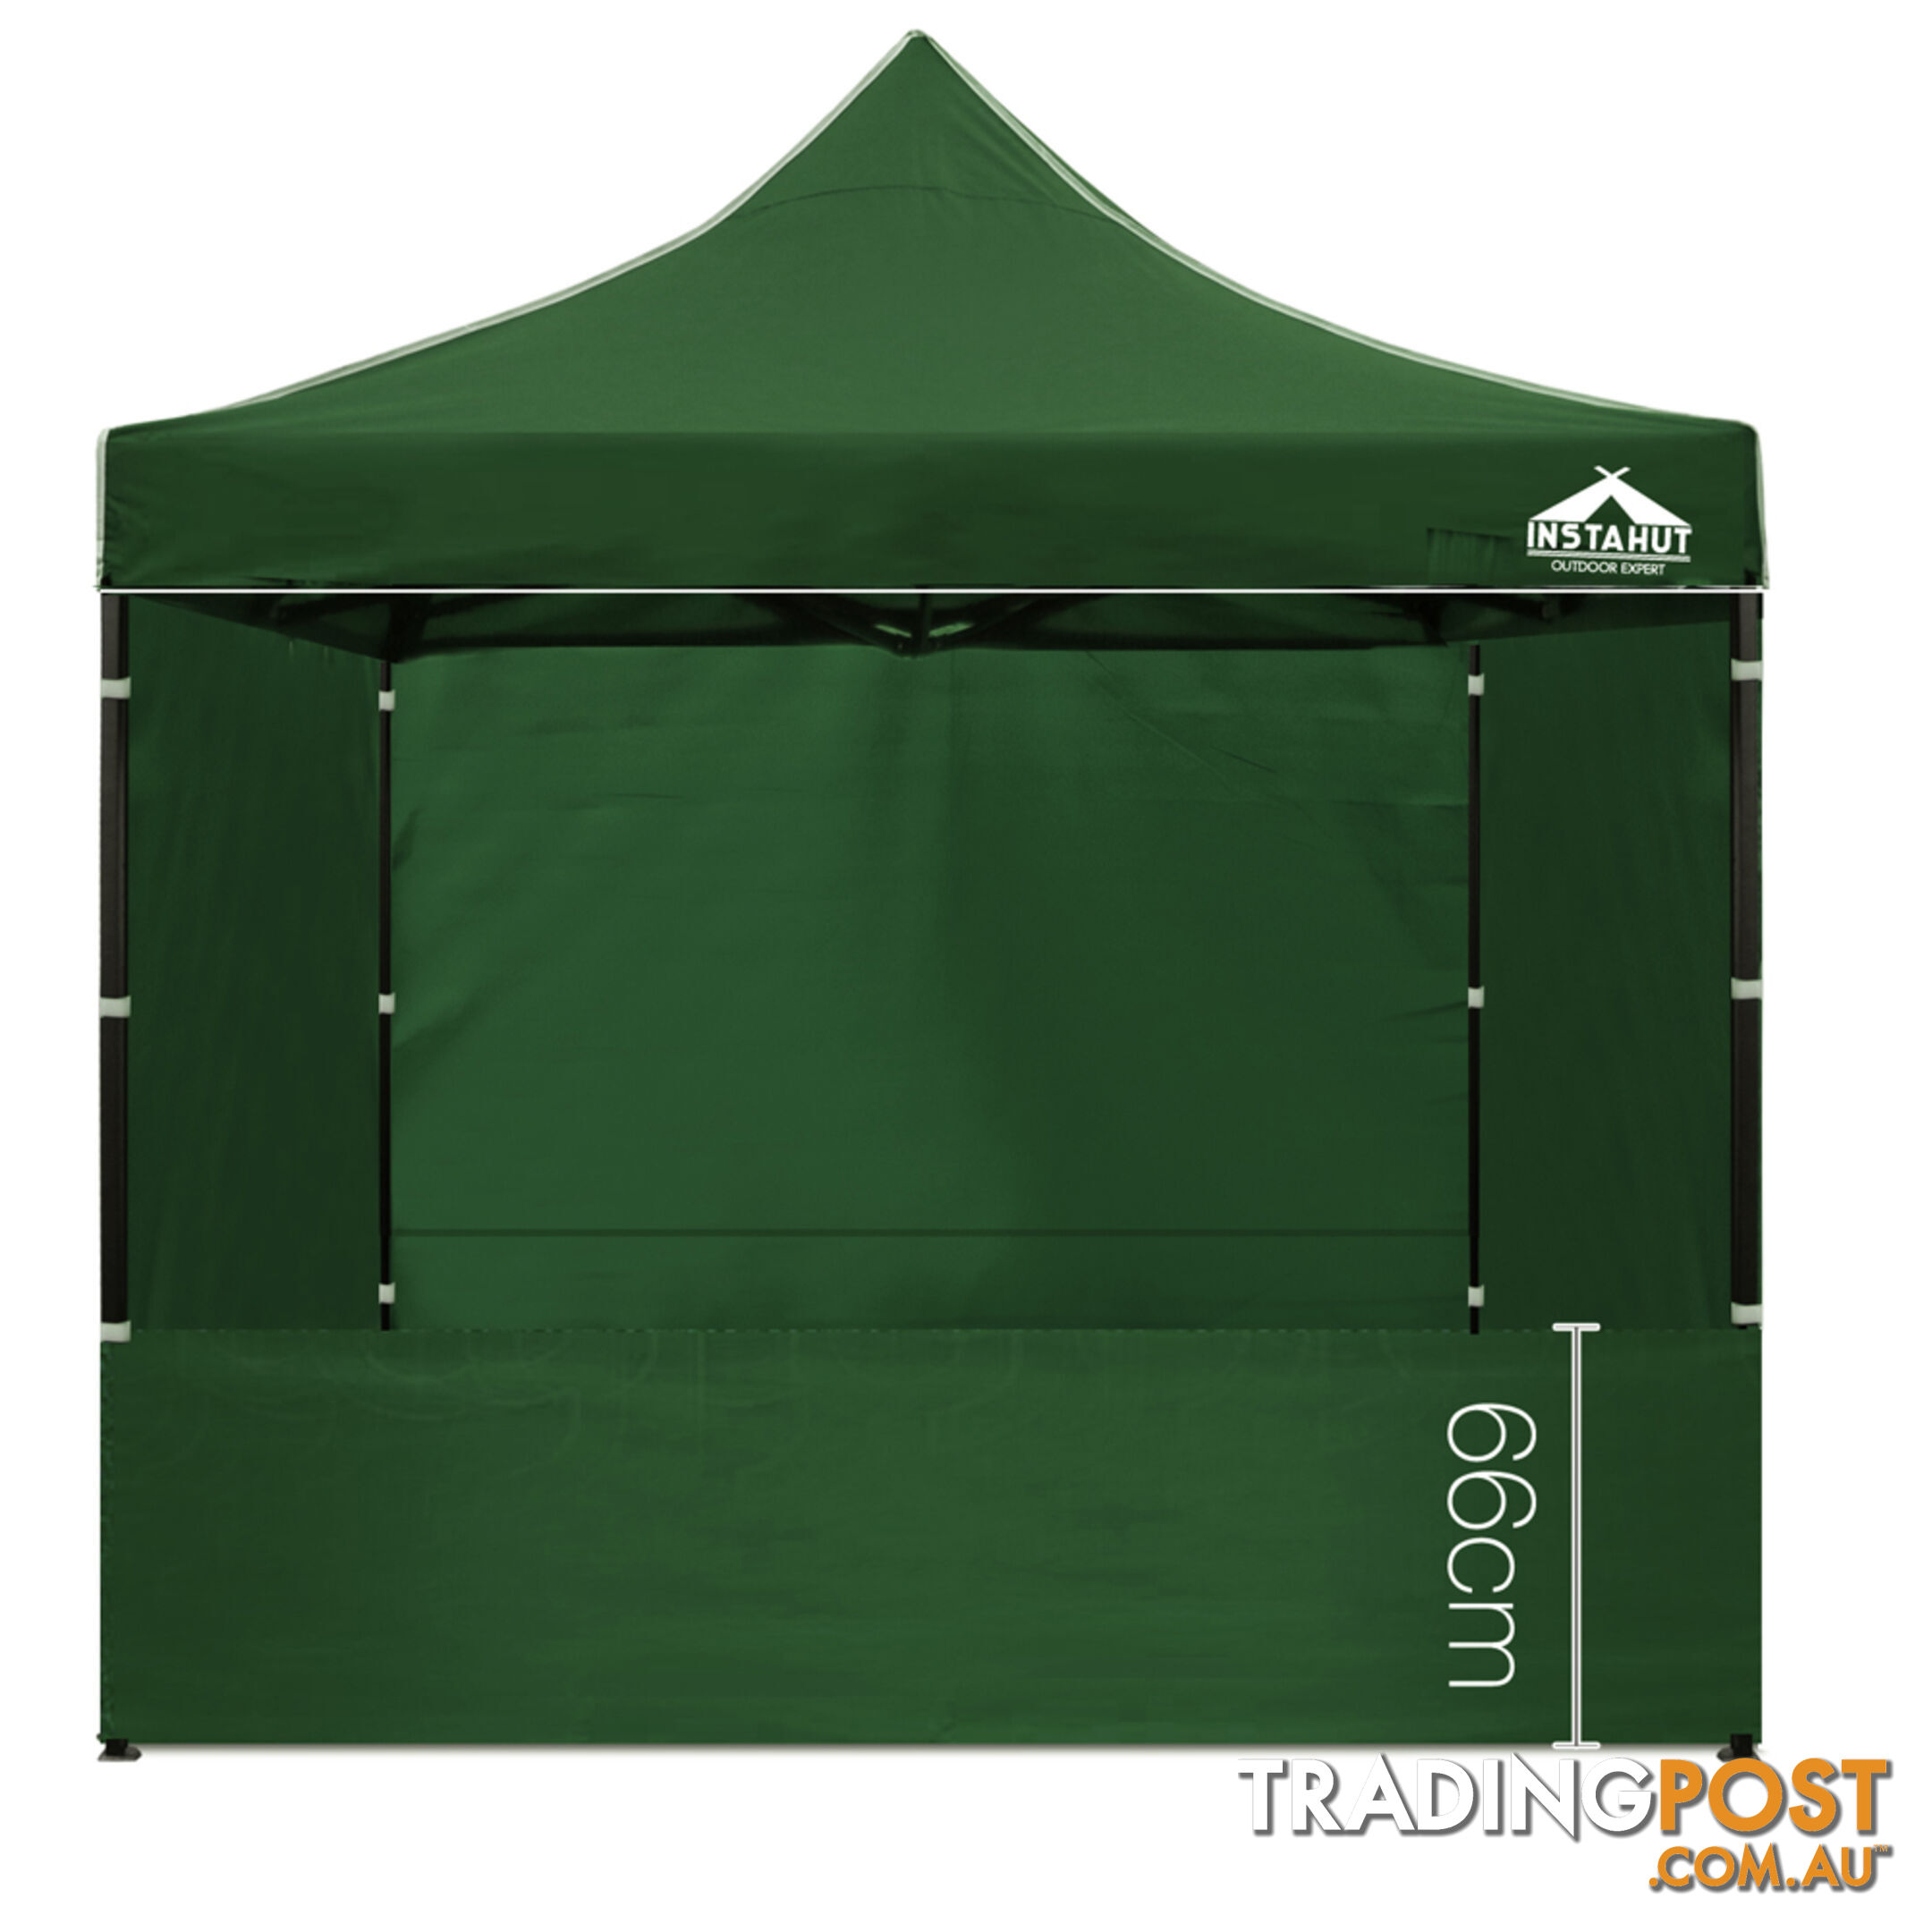 3x3 Pop Up Gazebo Hut with Sandbags Green